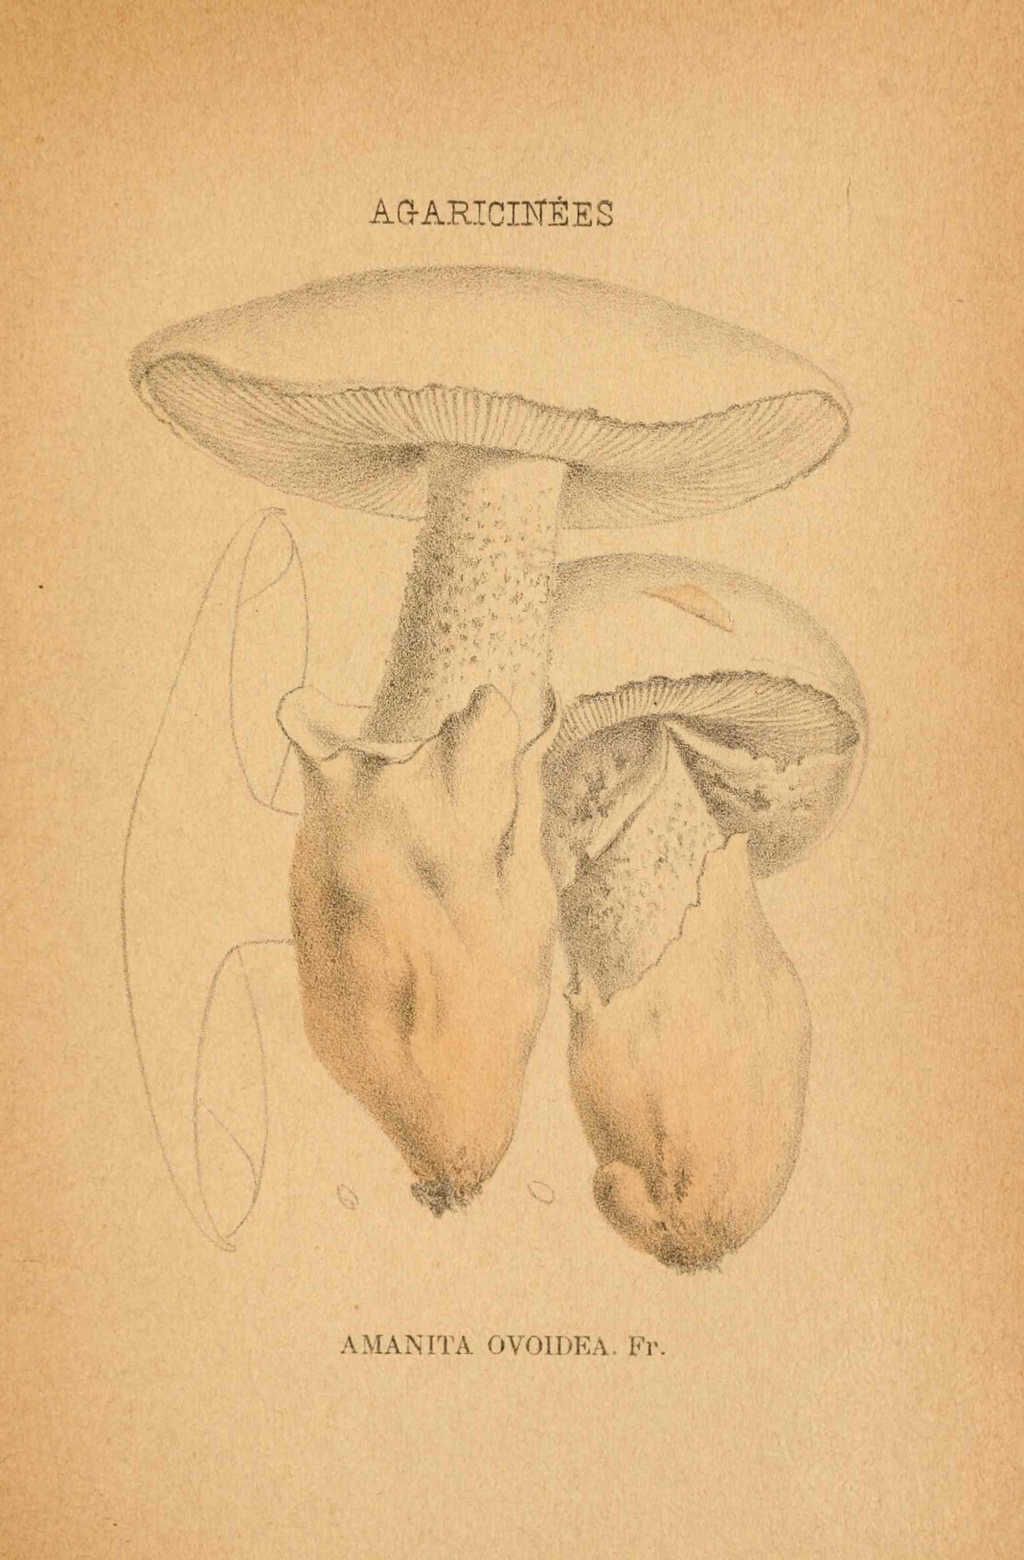 amanita ovoidea - dessin-gravure couleur de champignon